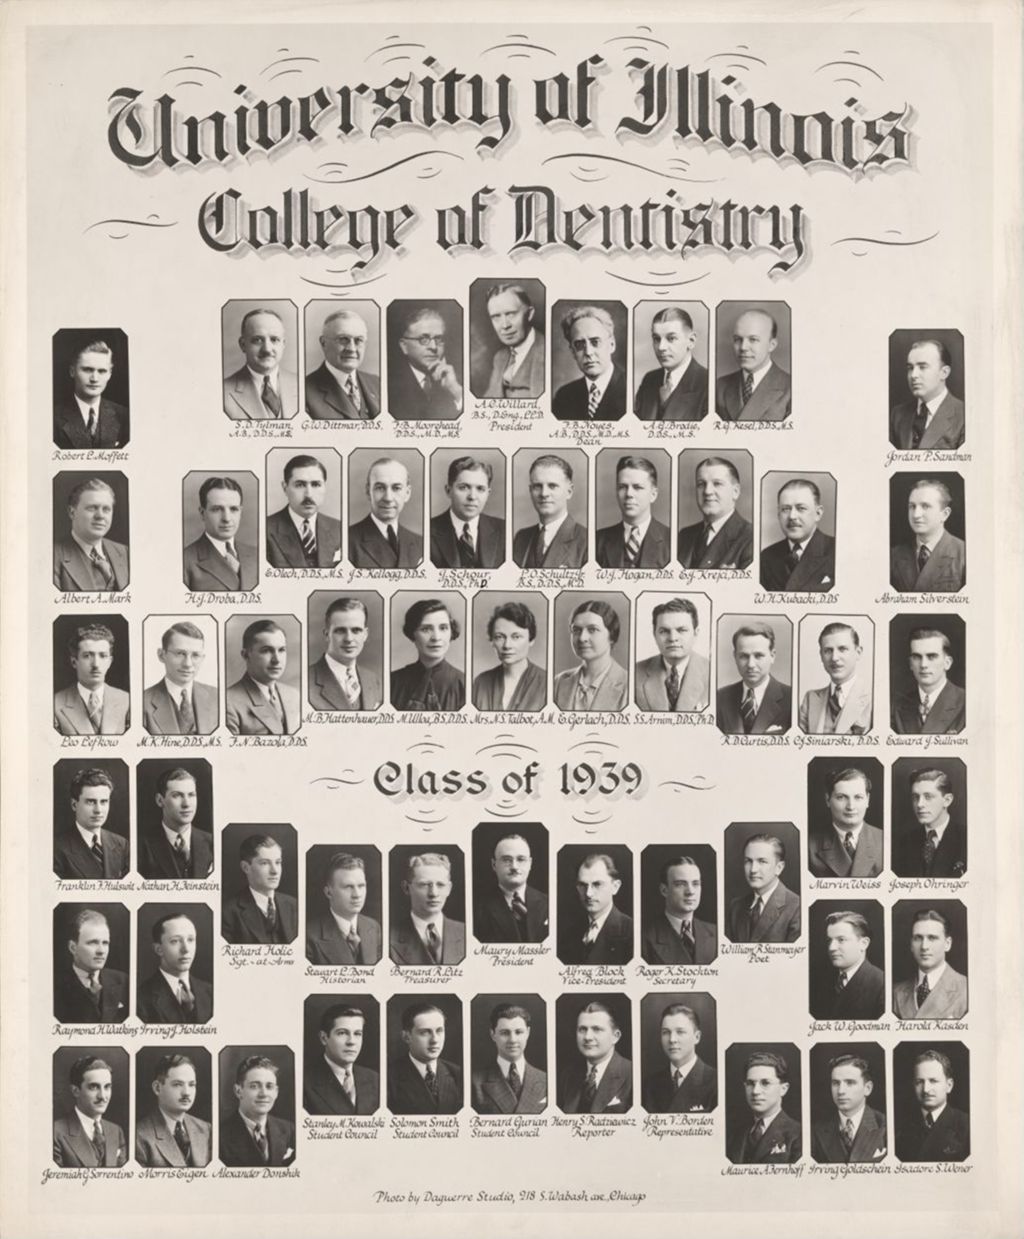 1939 graduating class, University of Illinois College of Dentistry